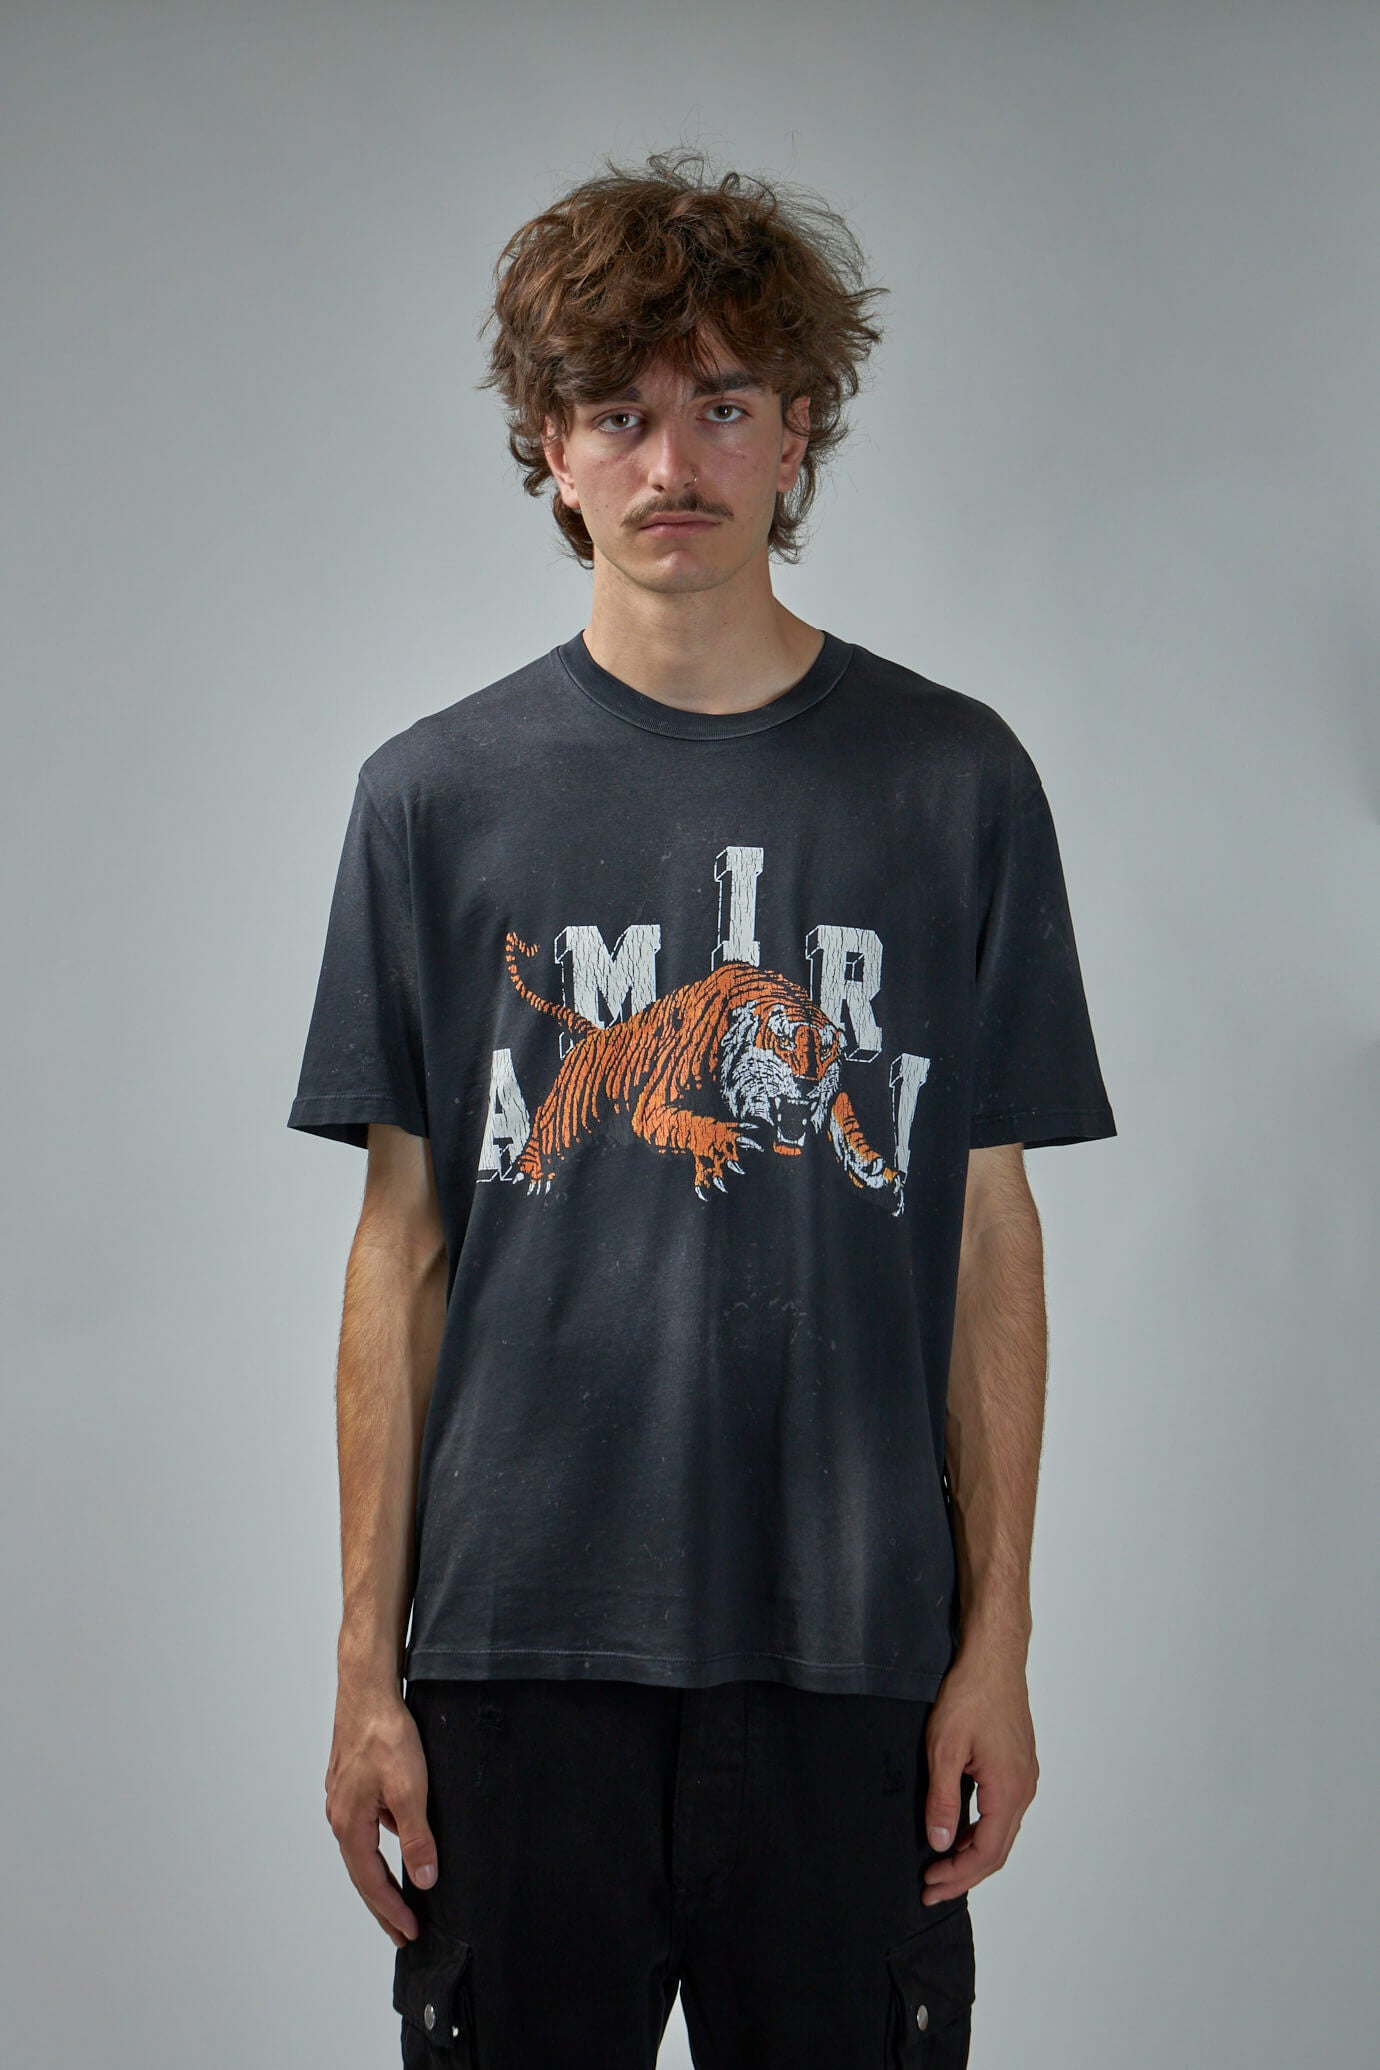 AMIRI - Logo-Print Cotton-Jersey T-Shirt - Orange Amiri